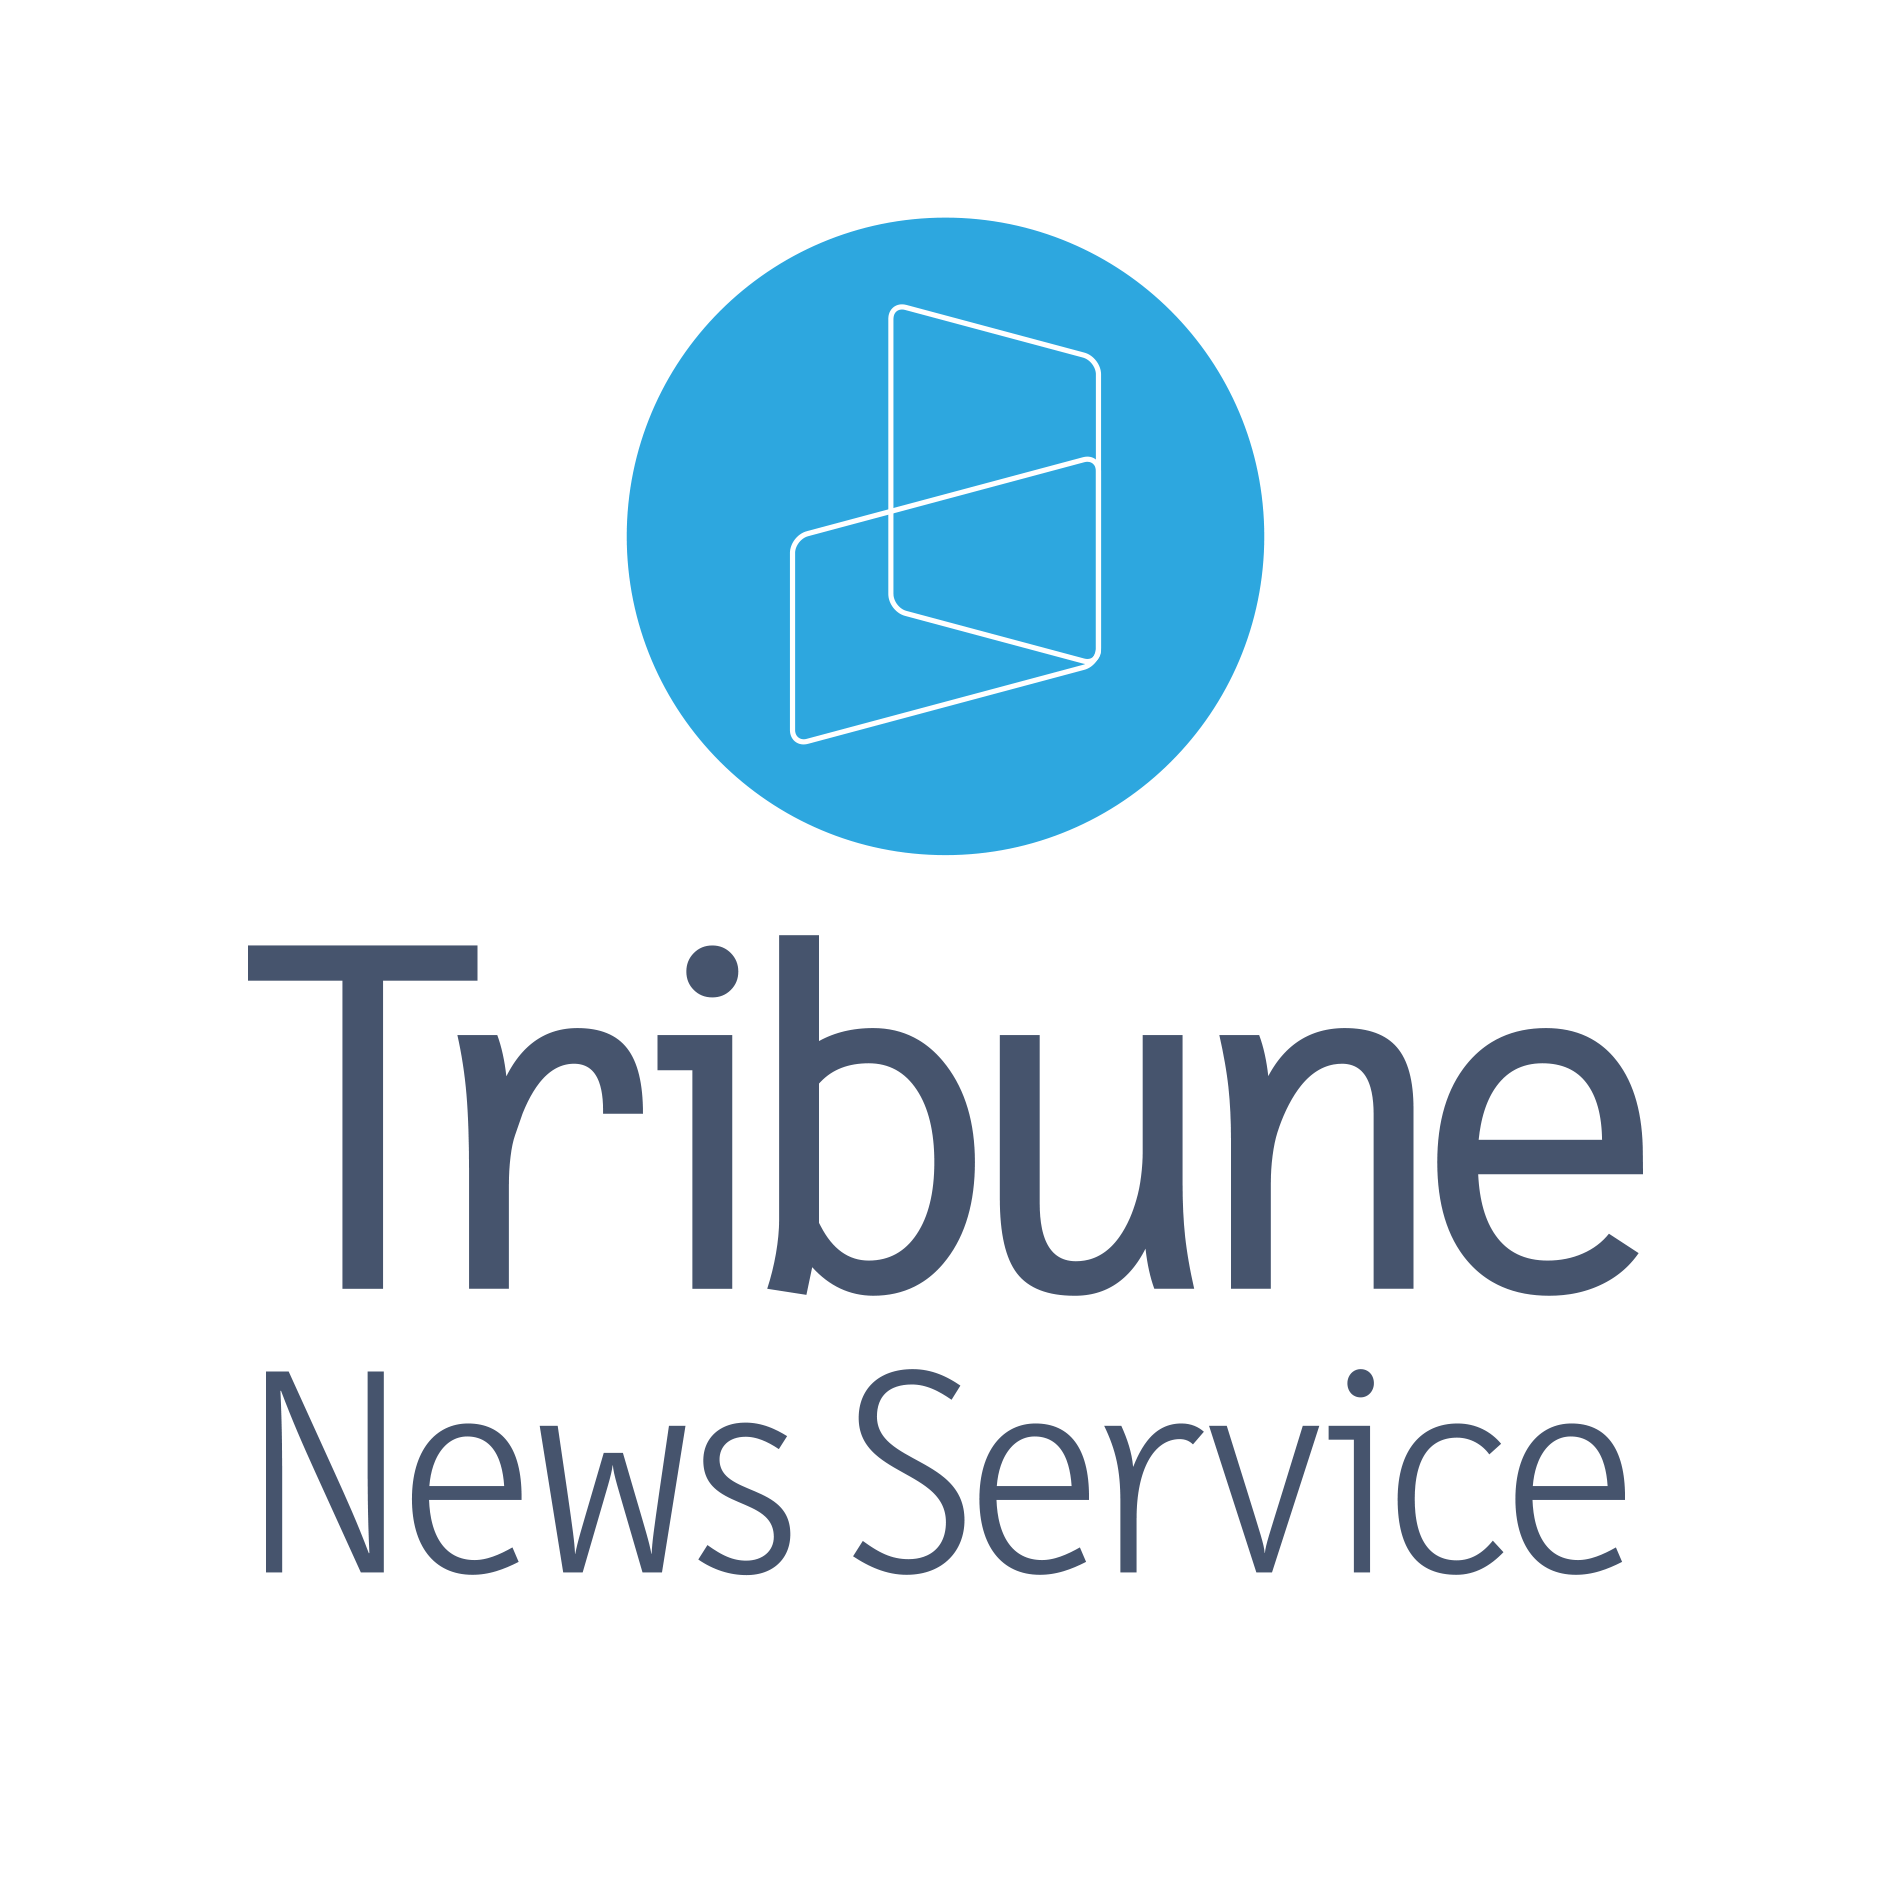 Tribune Logo - Tribune News Service | Tribune Content Agency